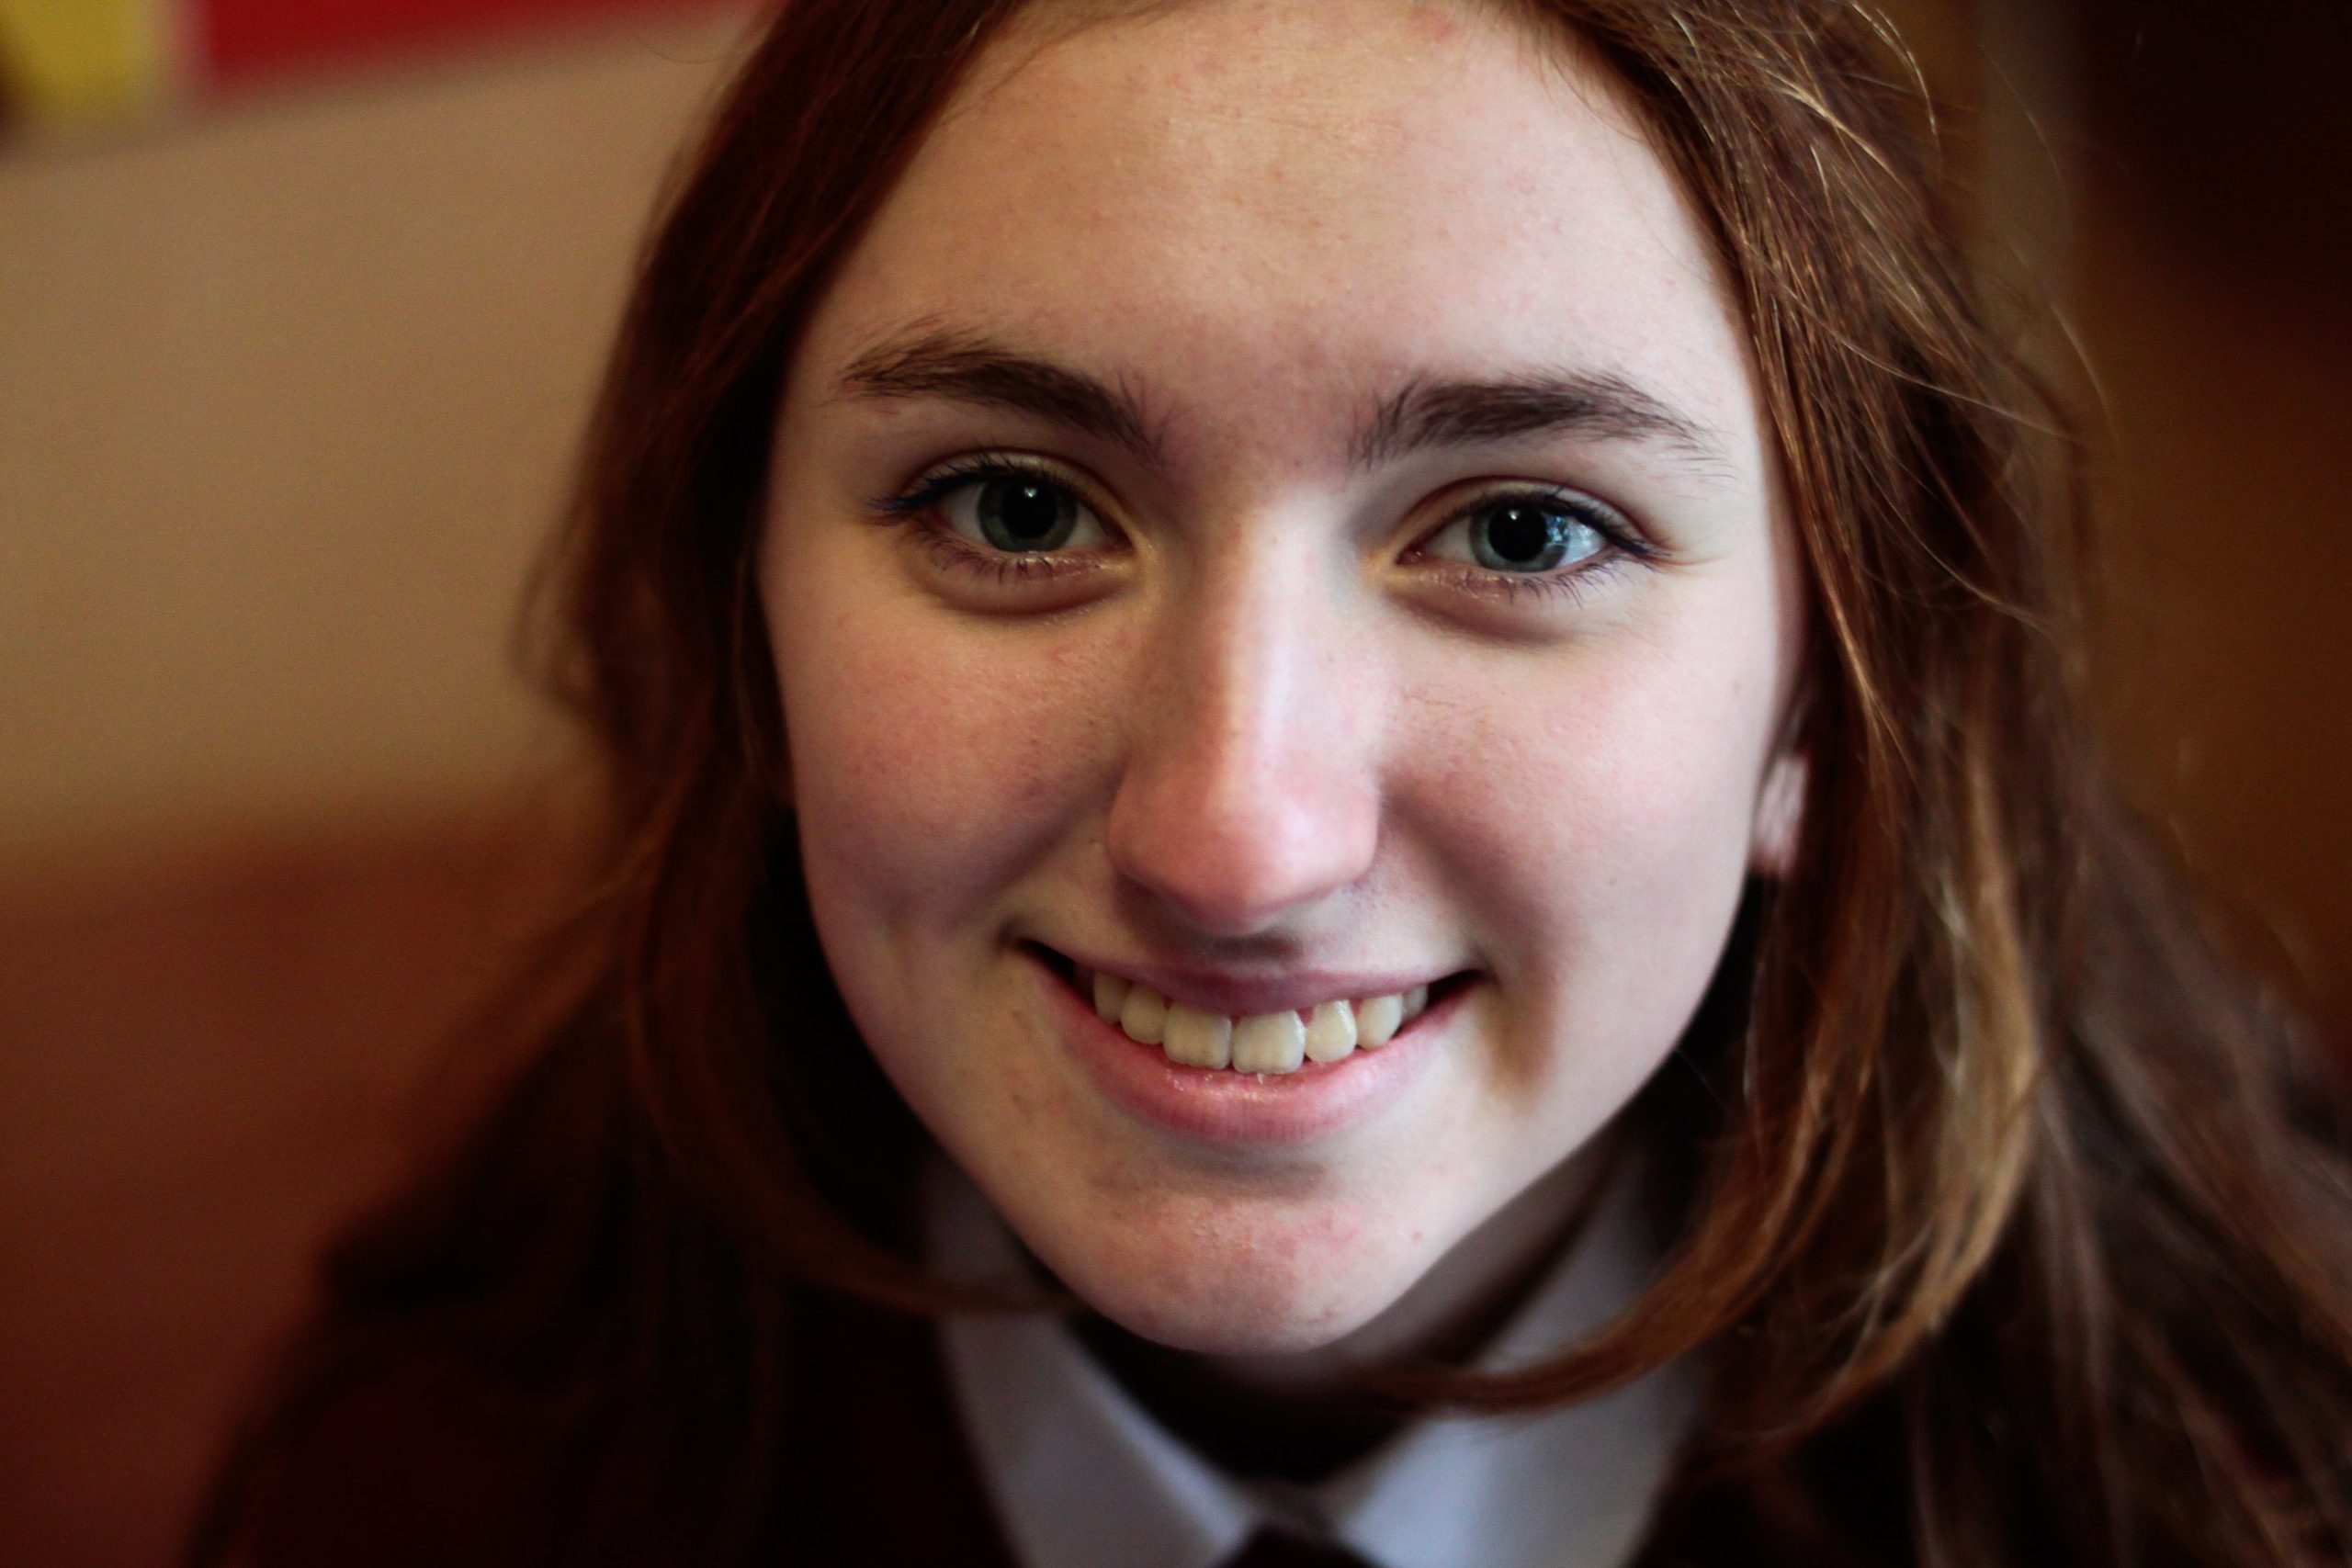 Headshot of a teenager in school uniform smiling